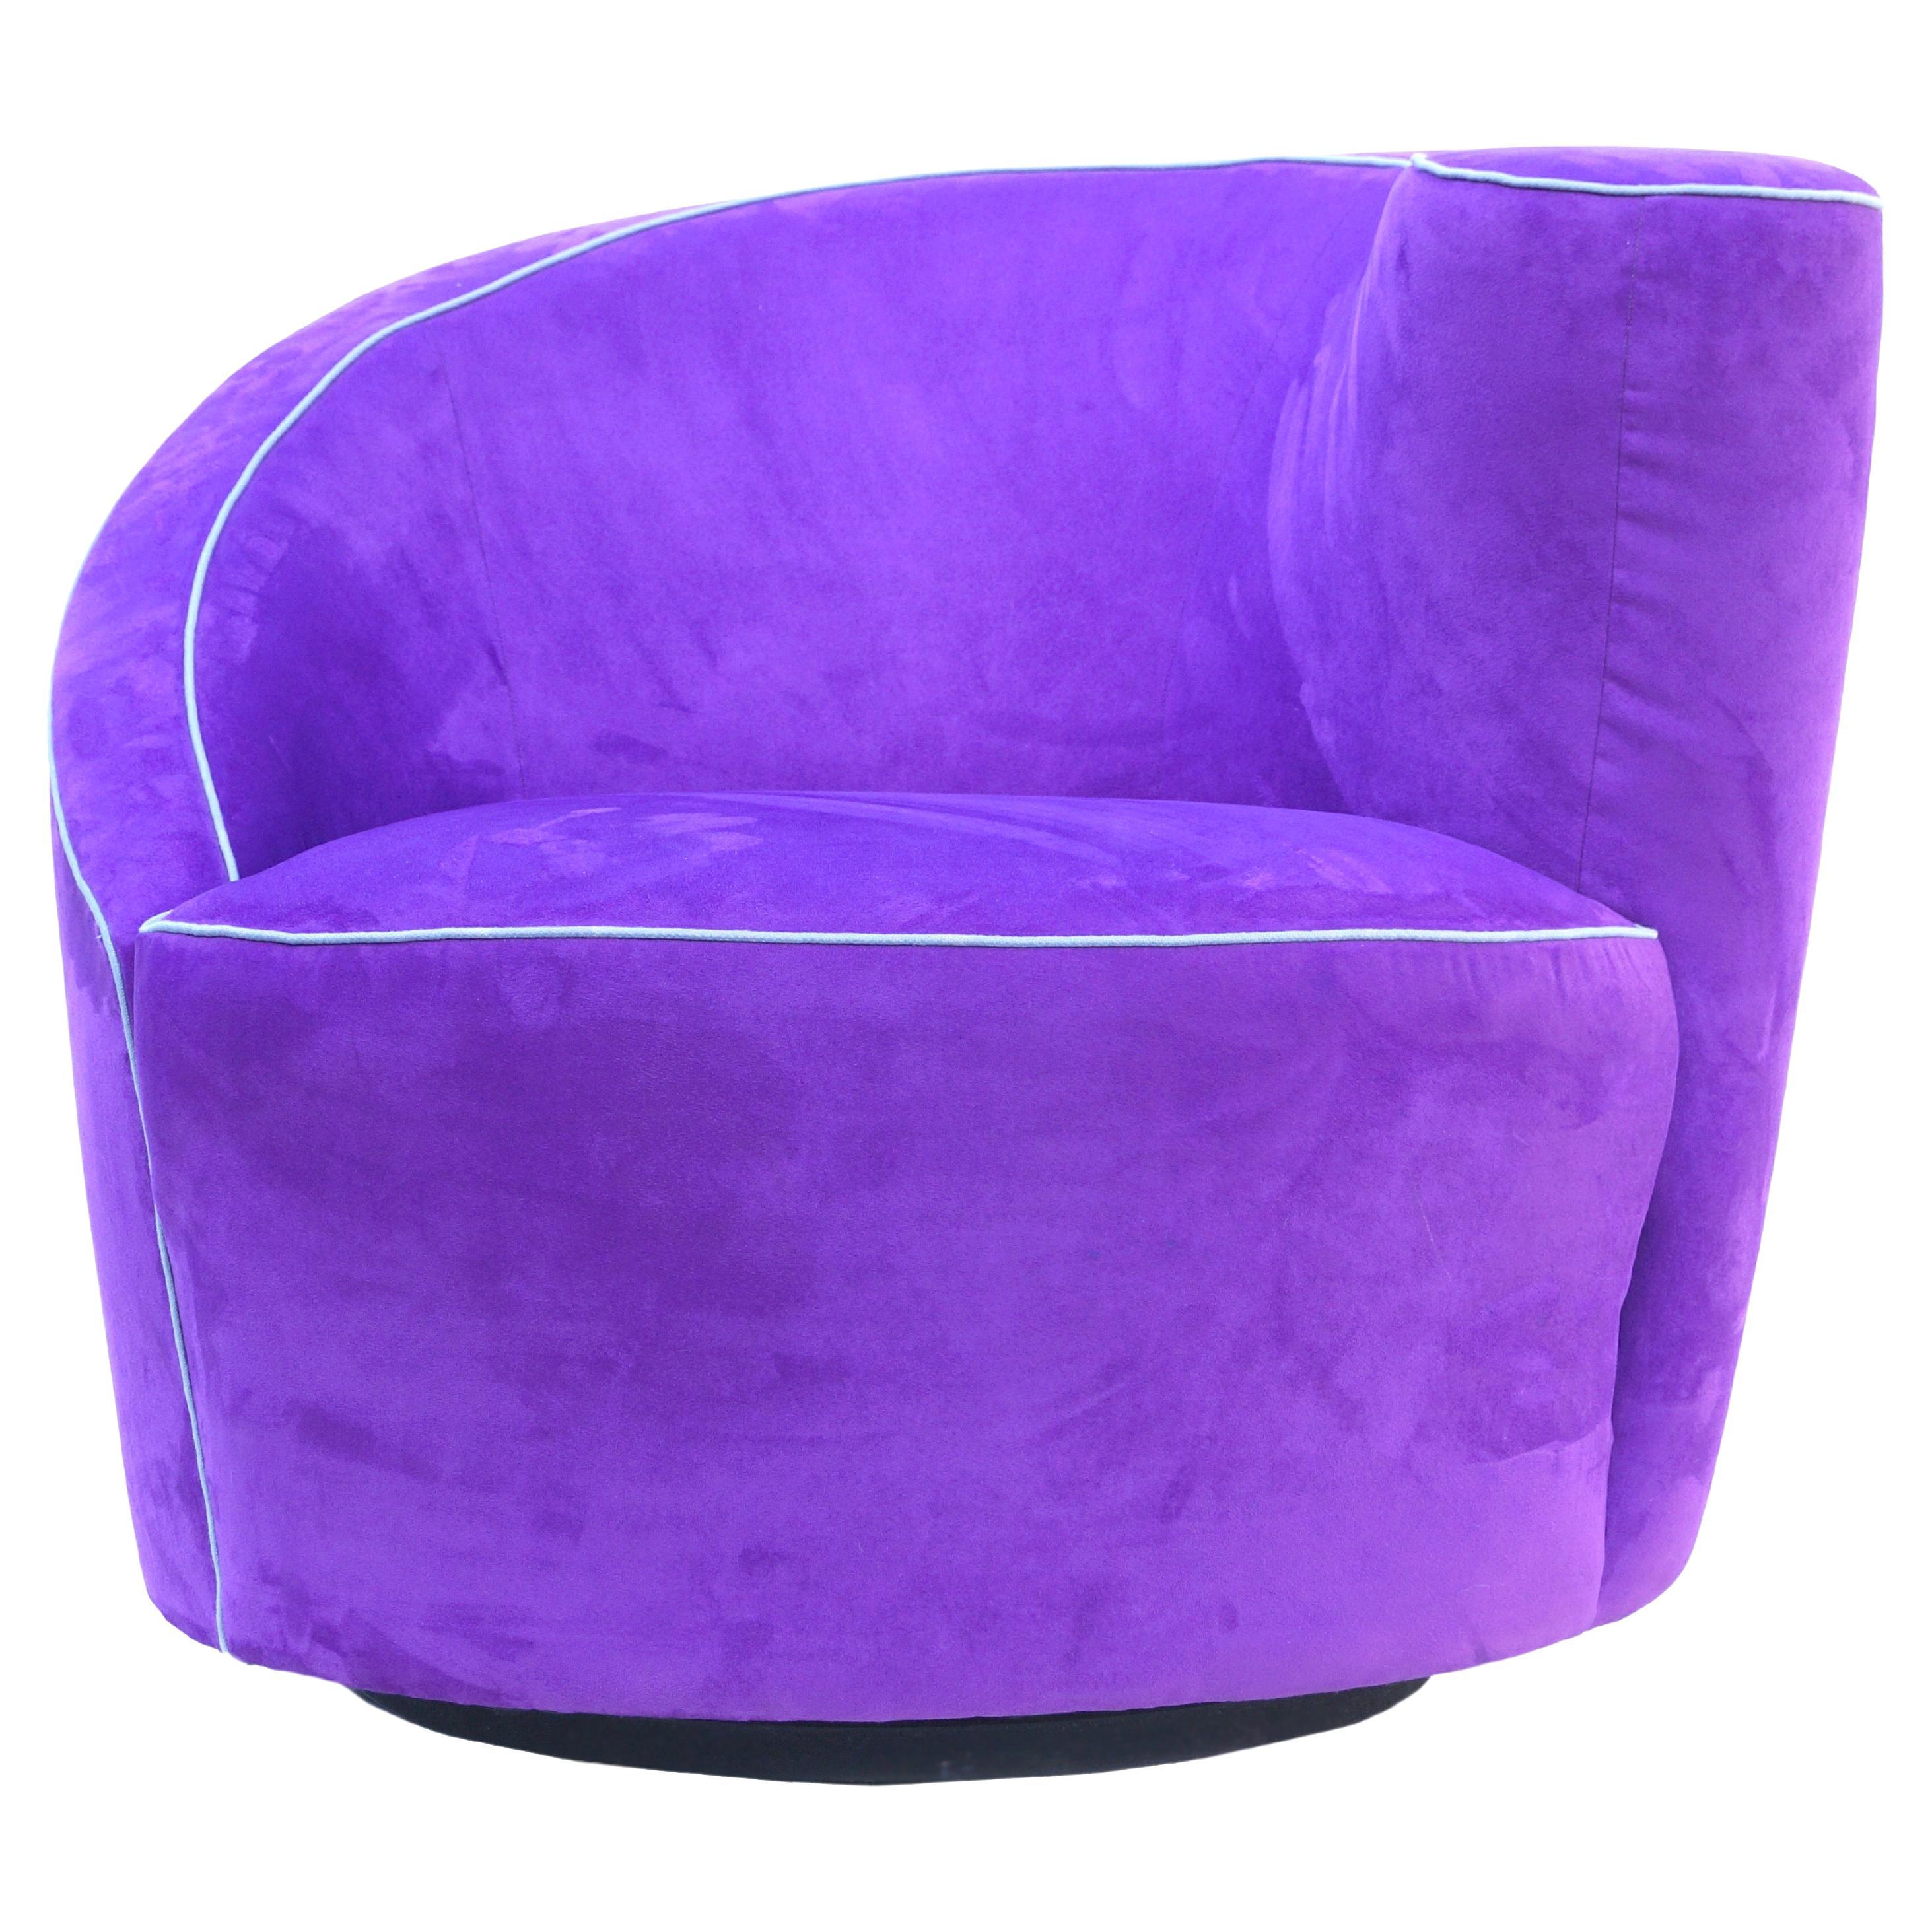 The Moderns Purple Modern Contemporary Swivel Lounge Chair Fauteuil de salon pivotant